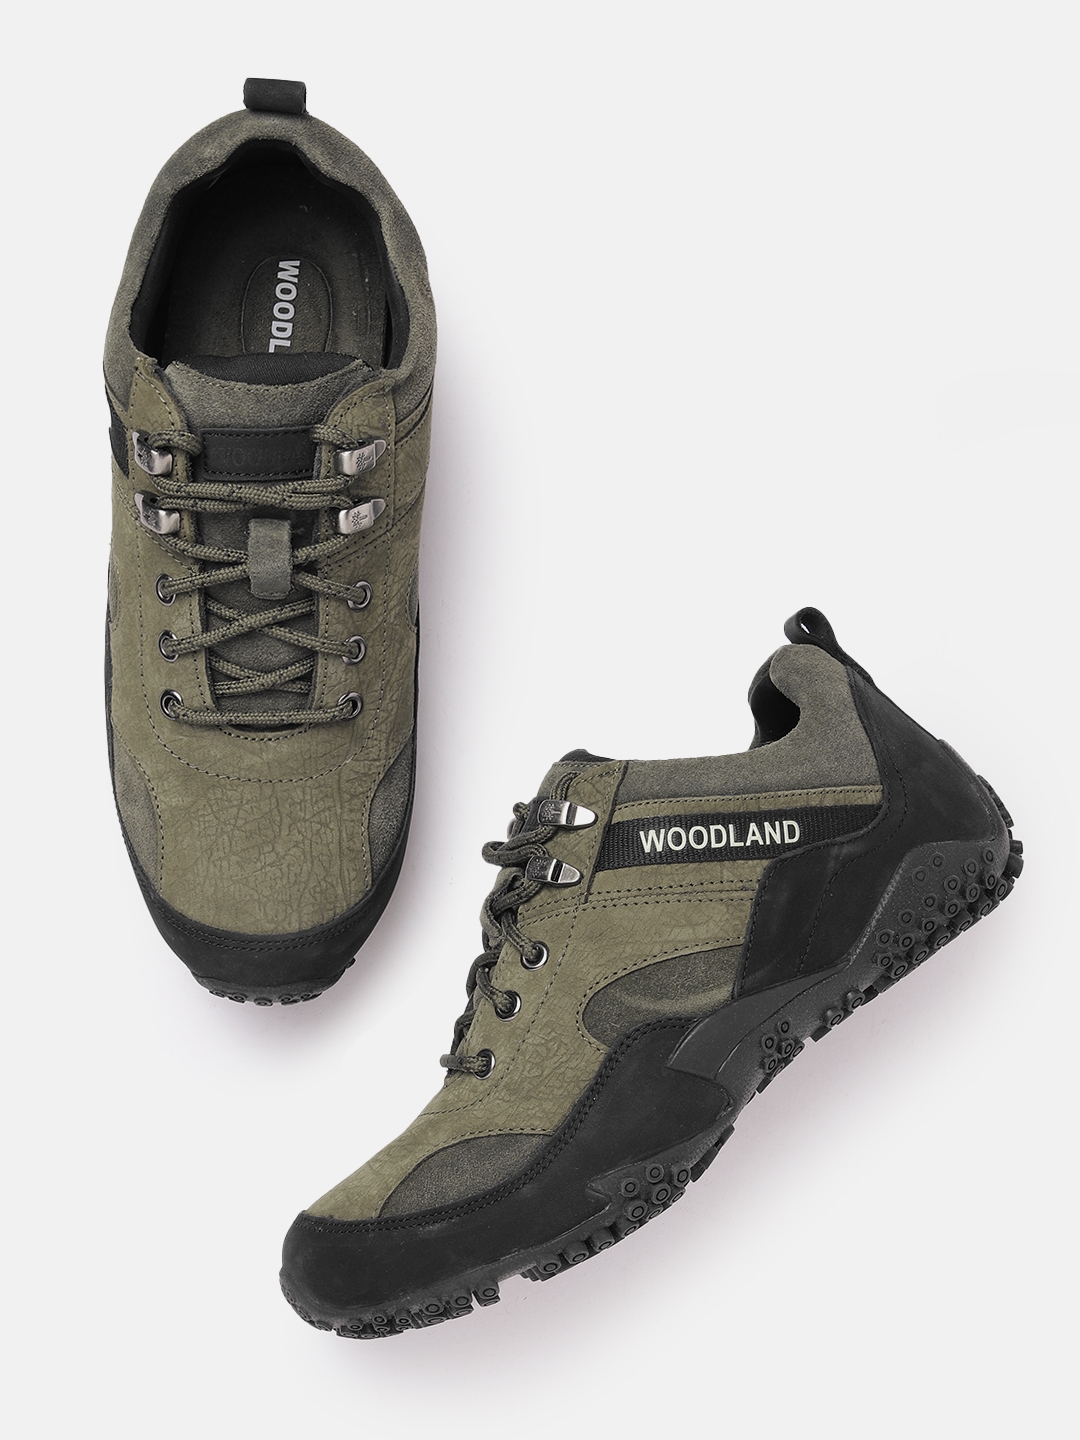 Footwear | Original woodland Shoes Size 7 | Freeup-saigonsouth.com.vn